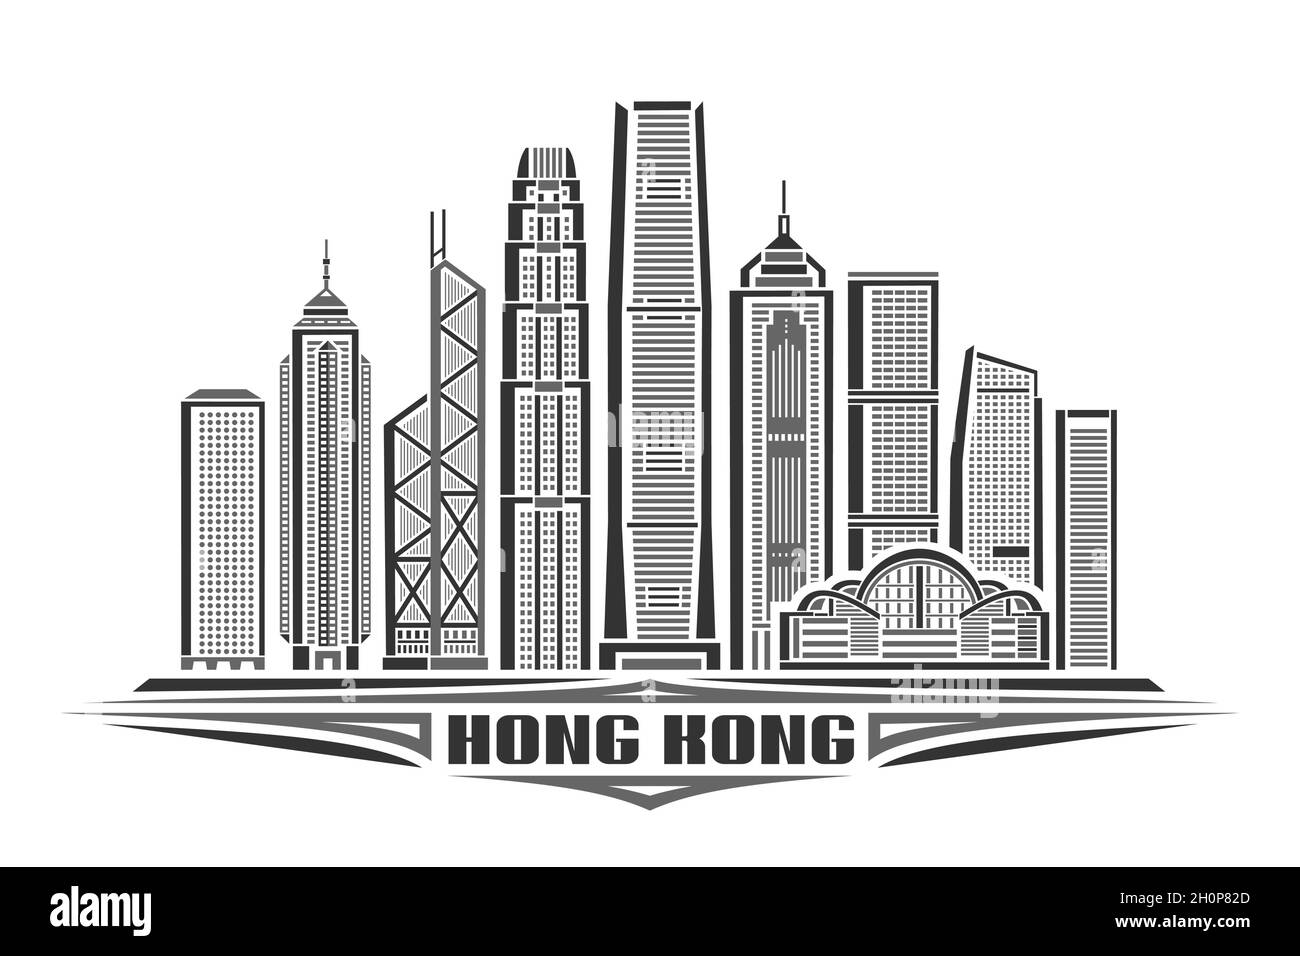 Vektor-Illustration von Hongkong, monochrome horizontale Poster mit linearem Design berühmte hongkong Stadtlandschaft, städtische Linie Kunst Konzept mit dekorativen l Stock Vektor